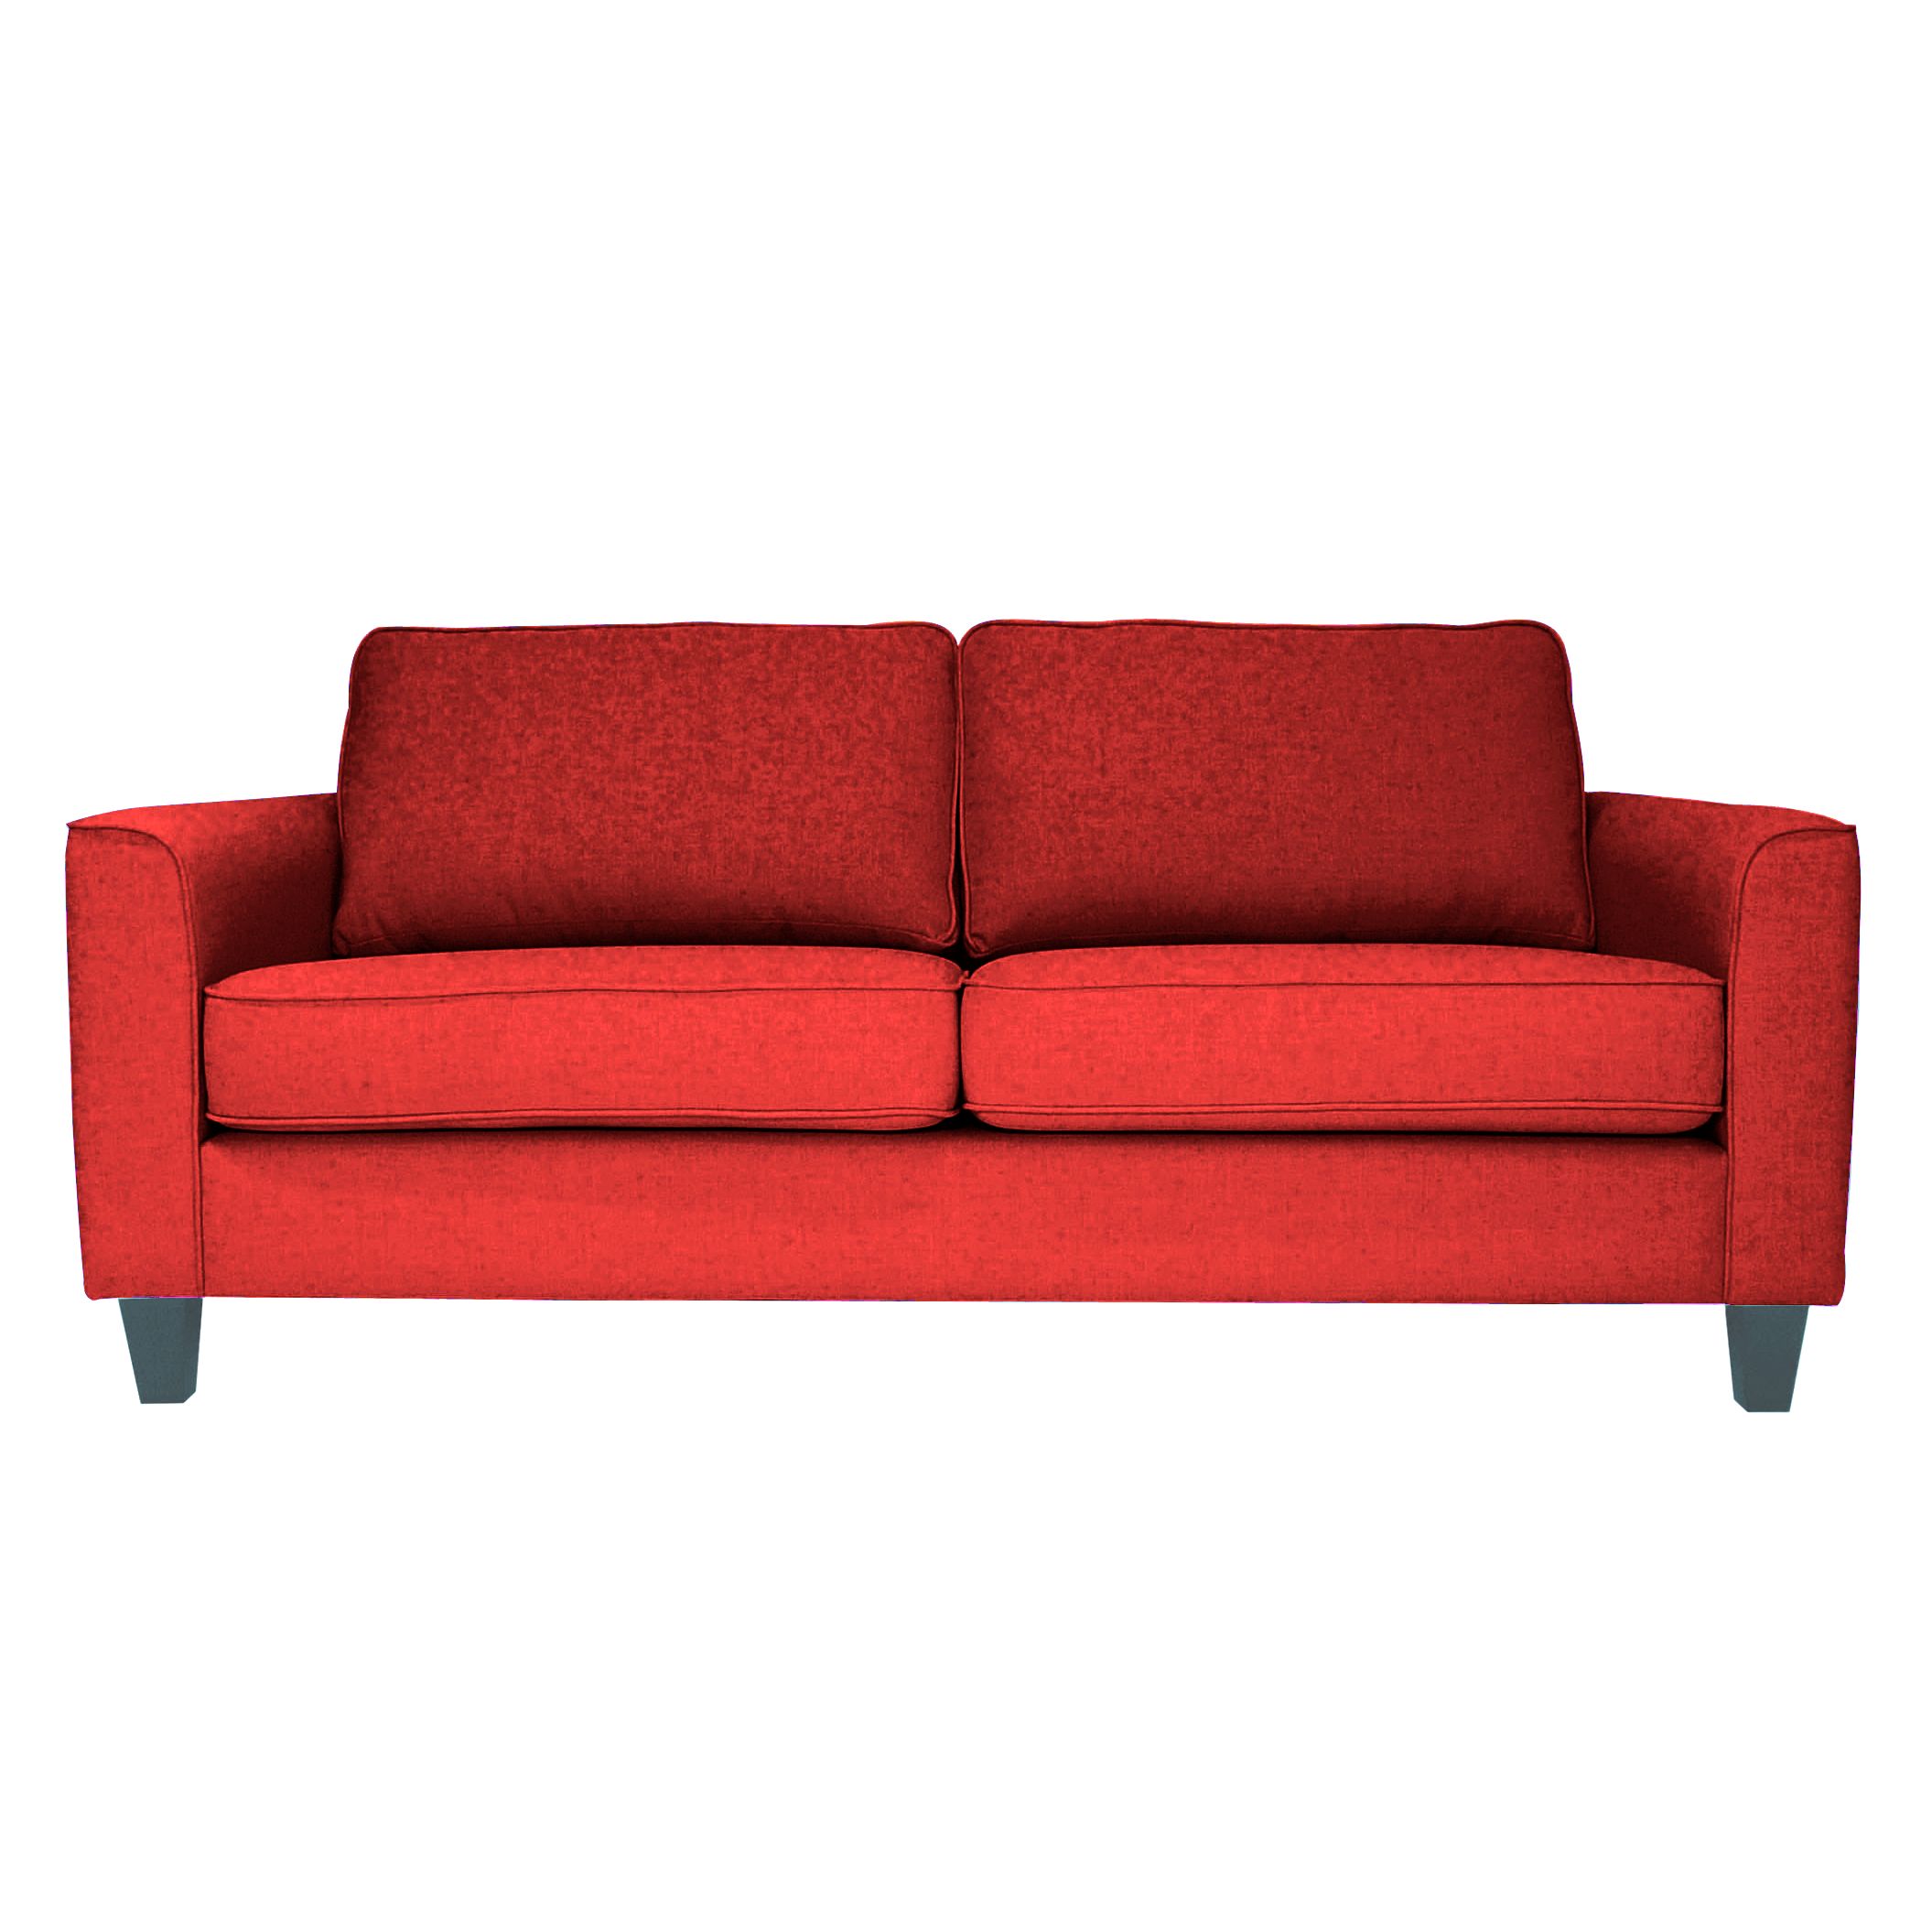 John Lewis Portia Medium Sofa Bed, Red at John Lewis